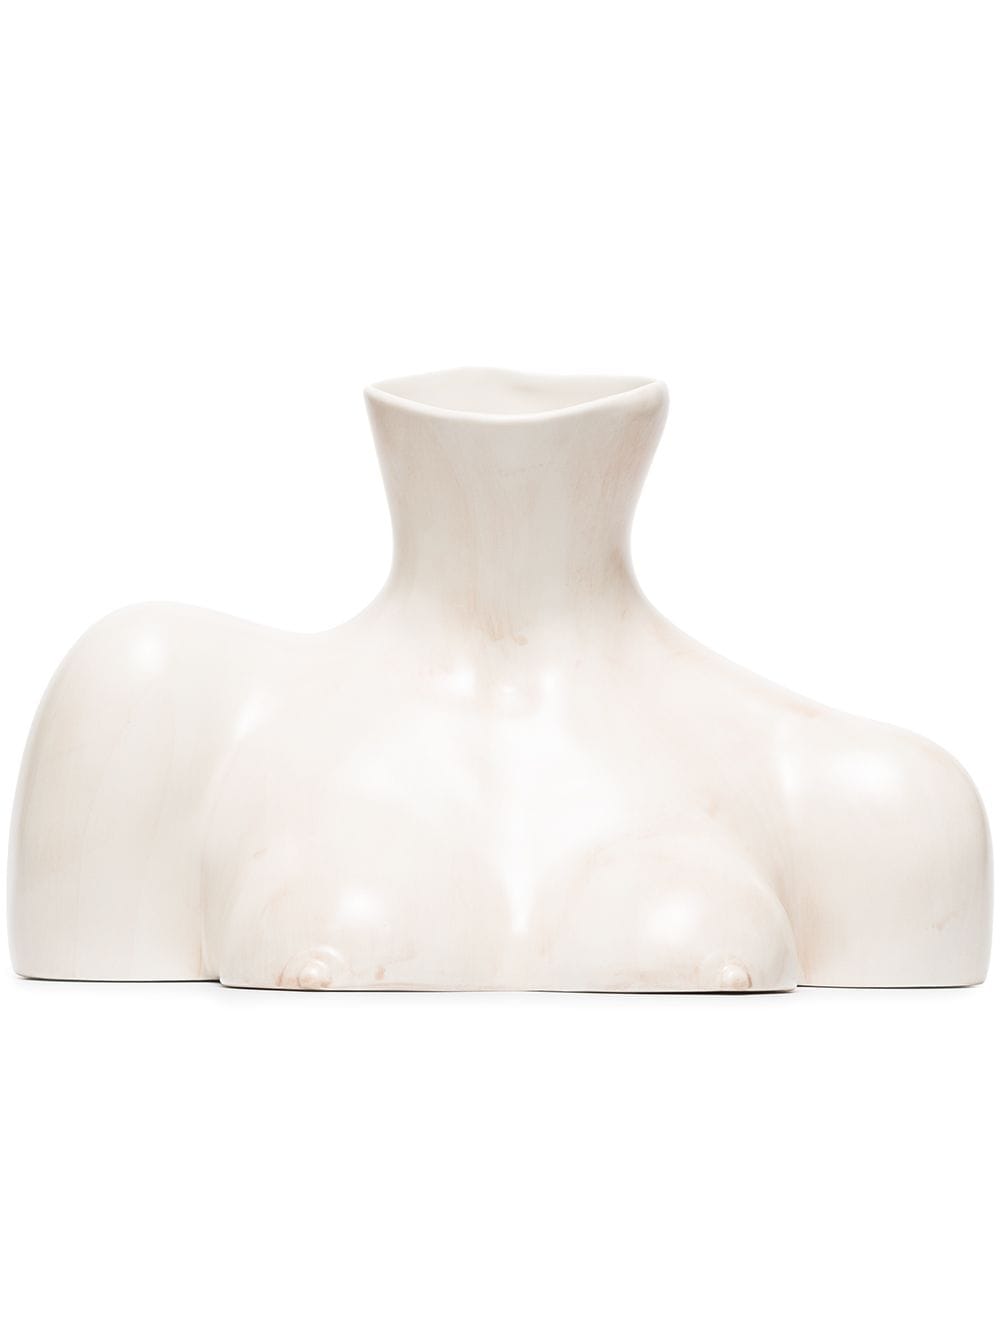 Image 1 of Anissa Kermiche Breast Friend ceramic vase